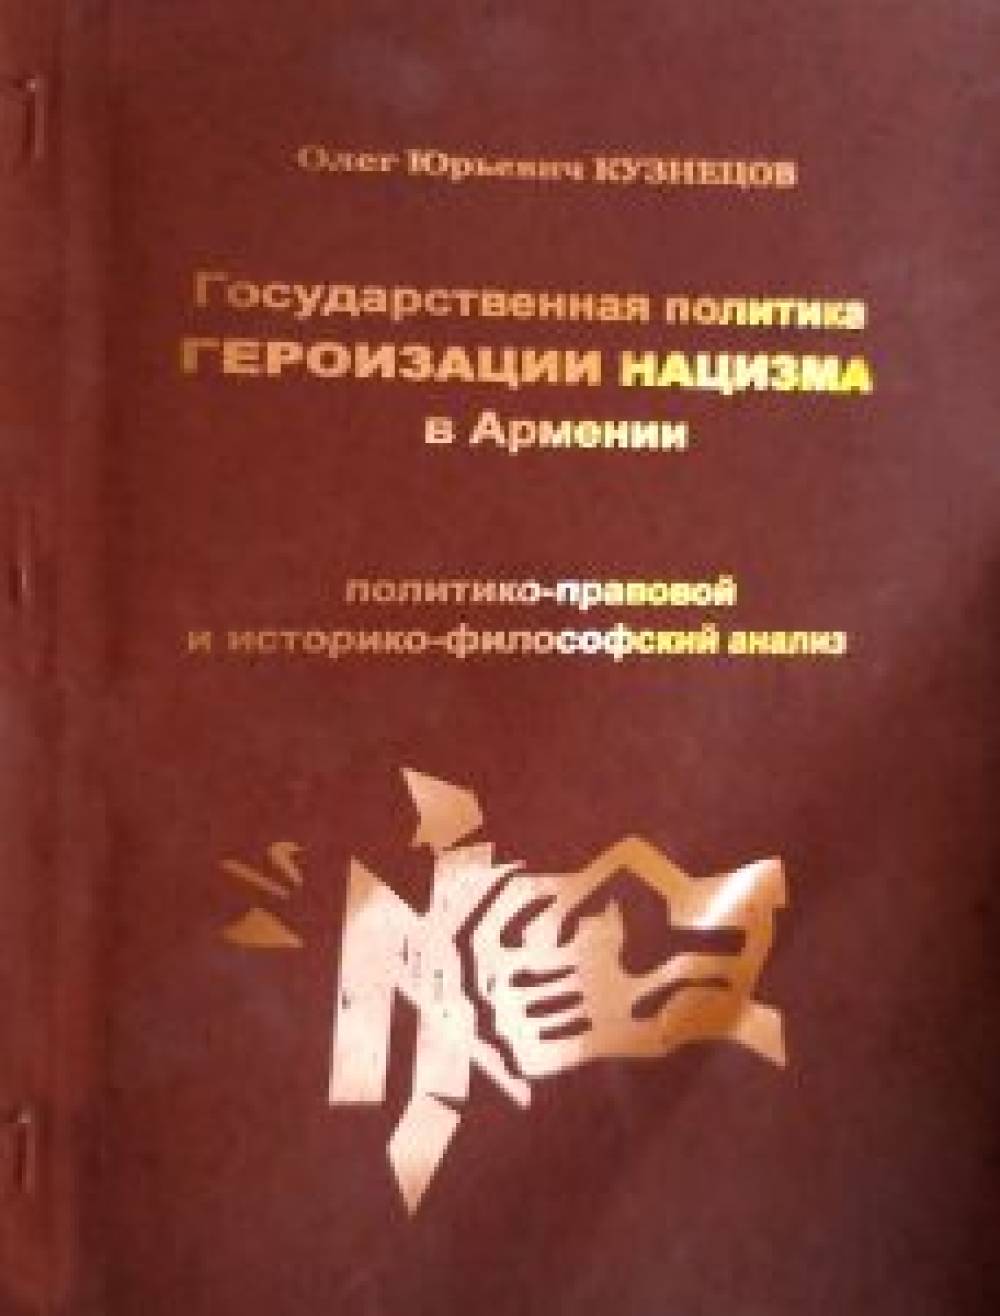 Oleg Yuryevich Kuznetsov: State policy of the Heroization of Nazism in Armenia   (Politics - legal and historian - philosophical analysis)